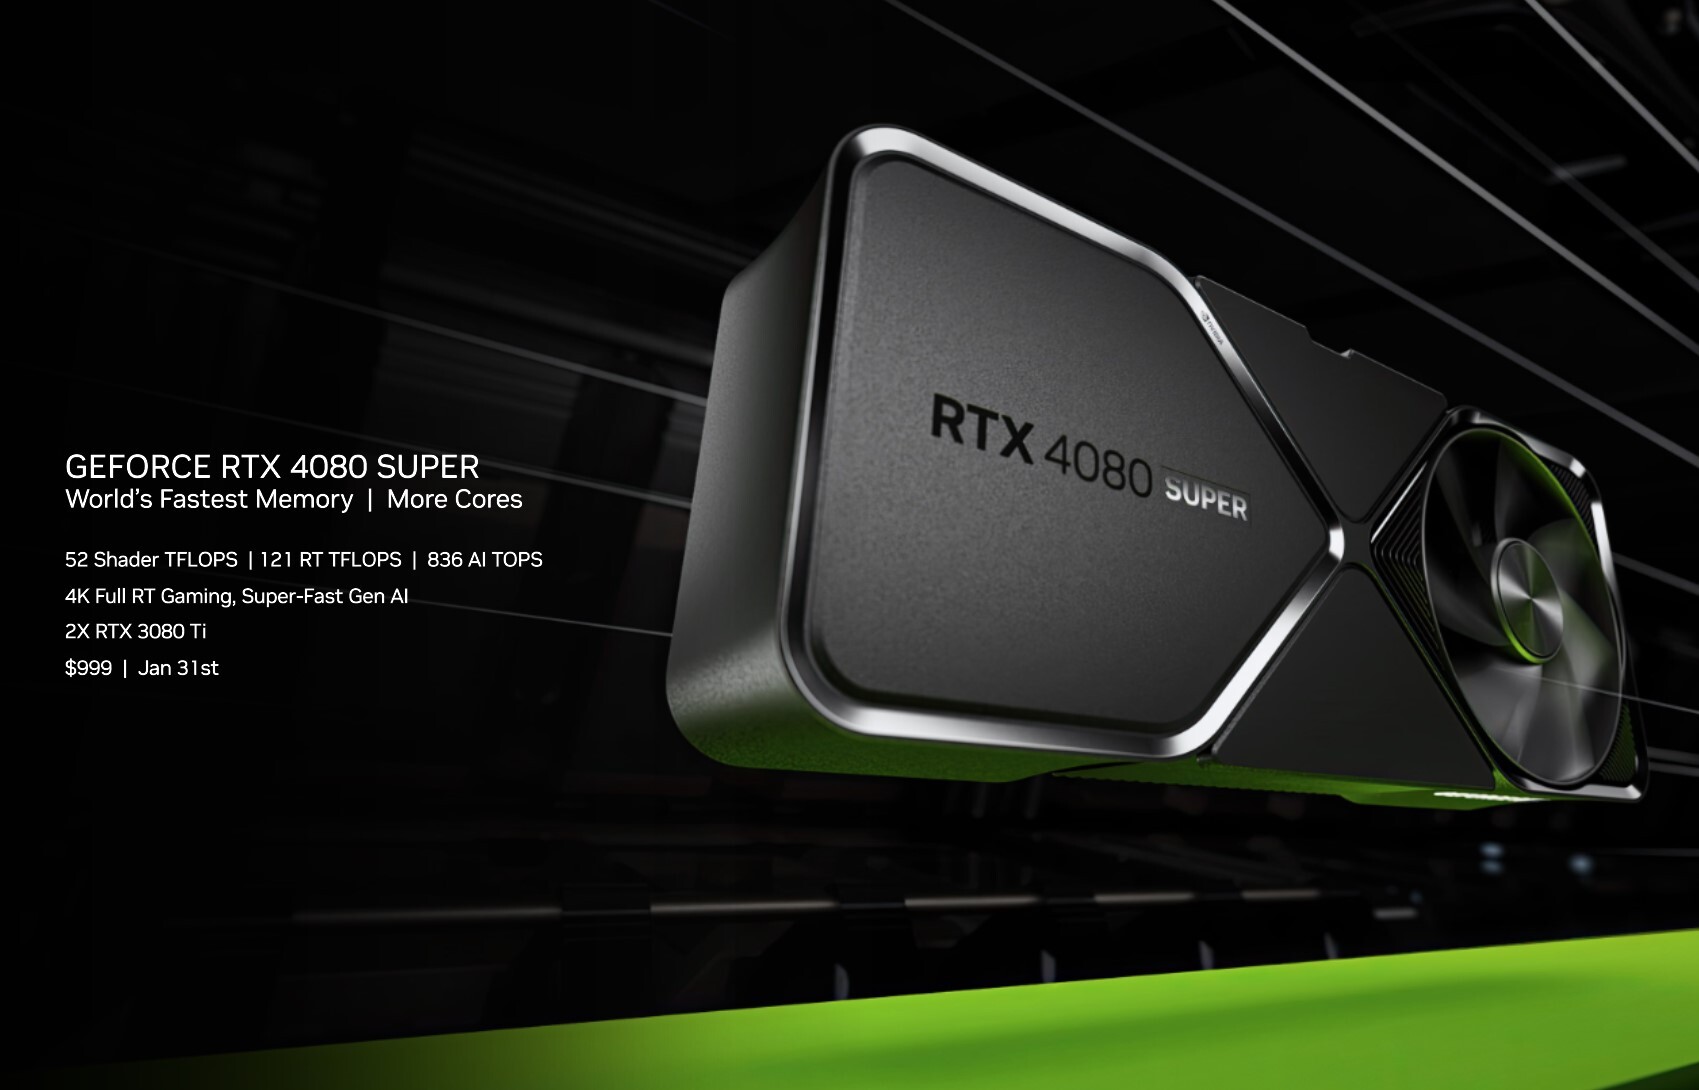 Nvidia GeForce RTX 40 Super series